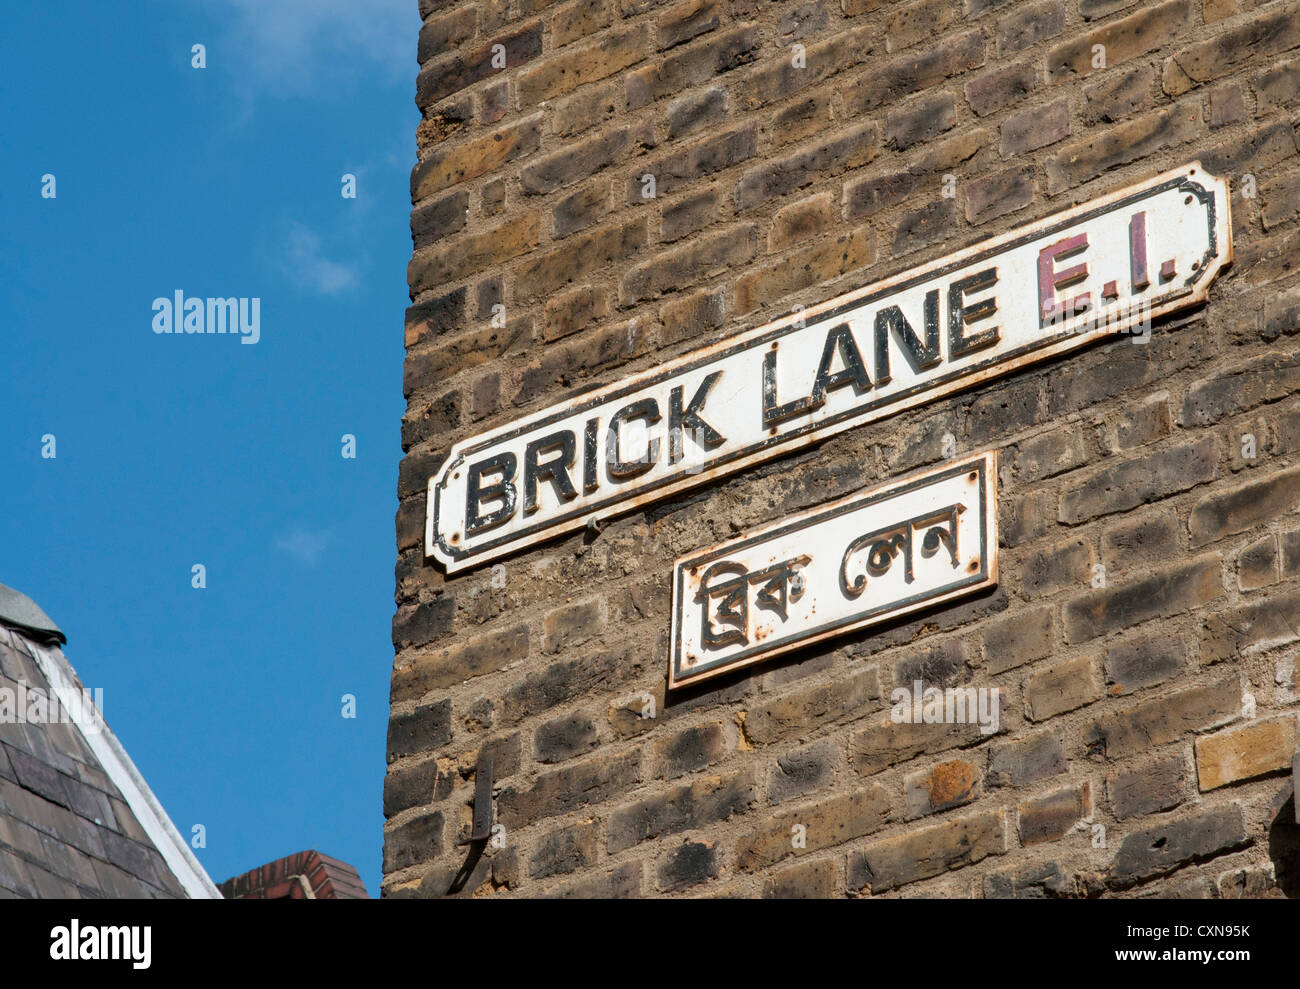 Brick Lane sign, London, UK Stock Photo